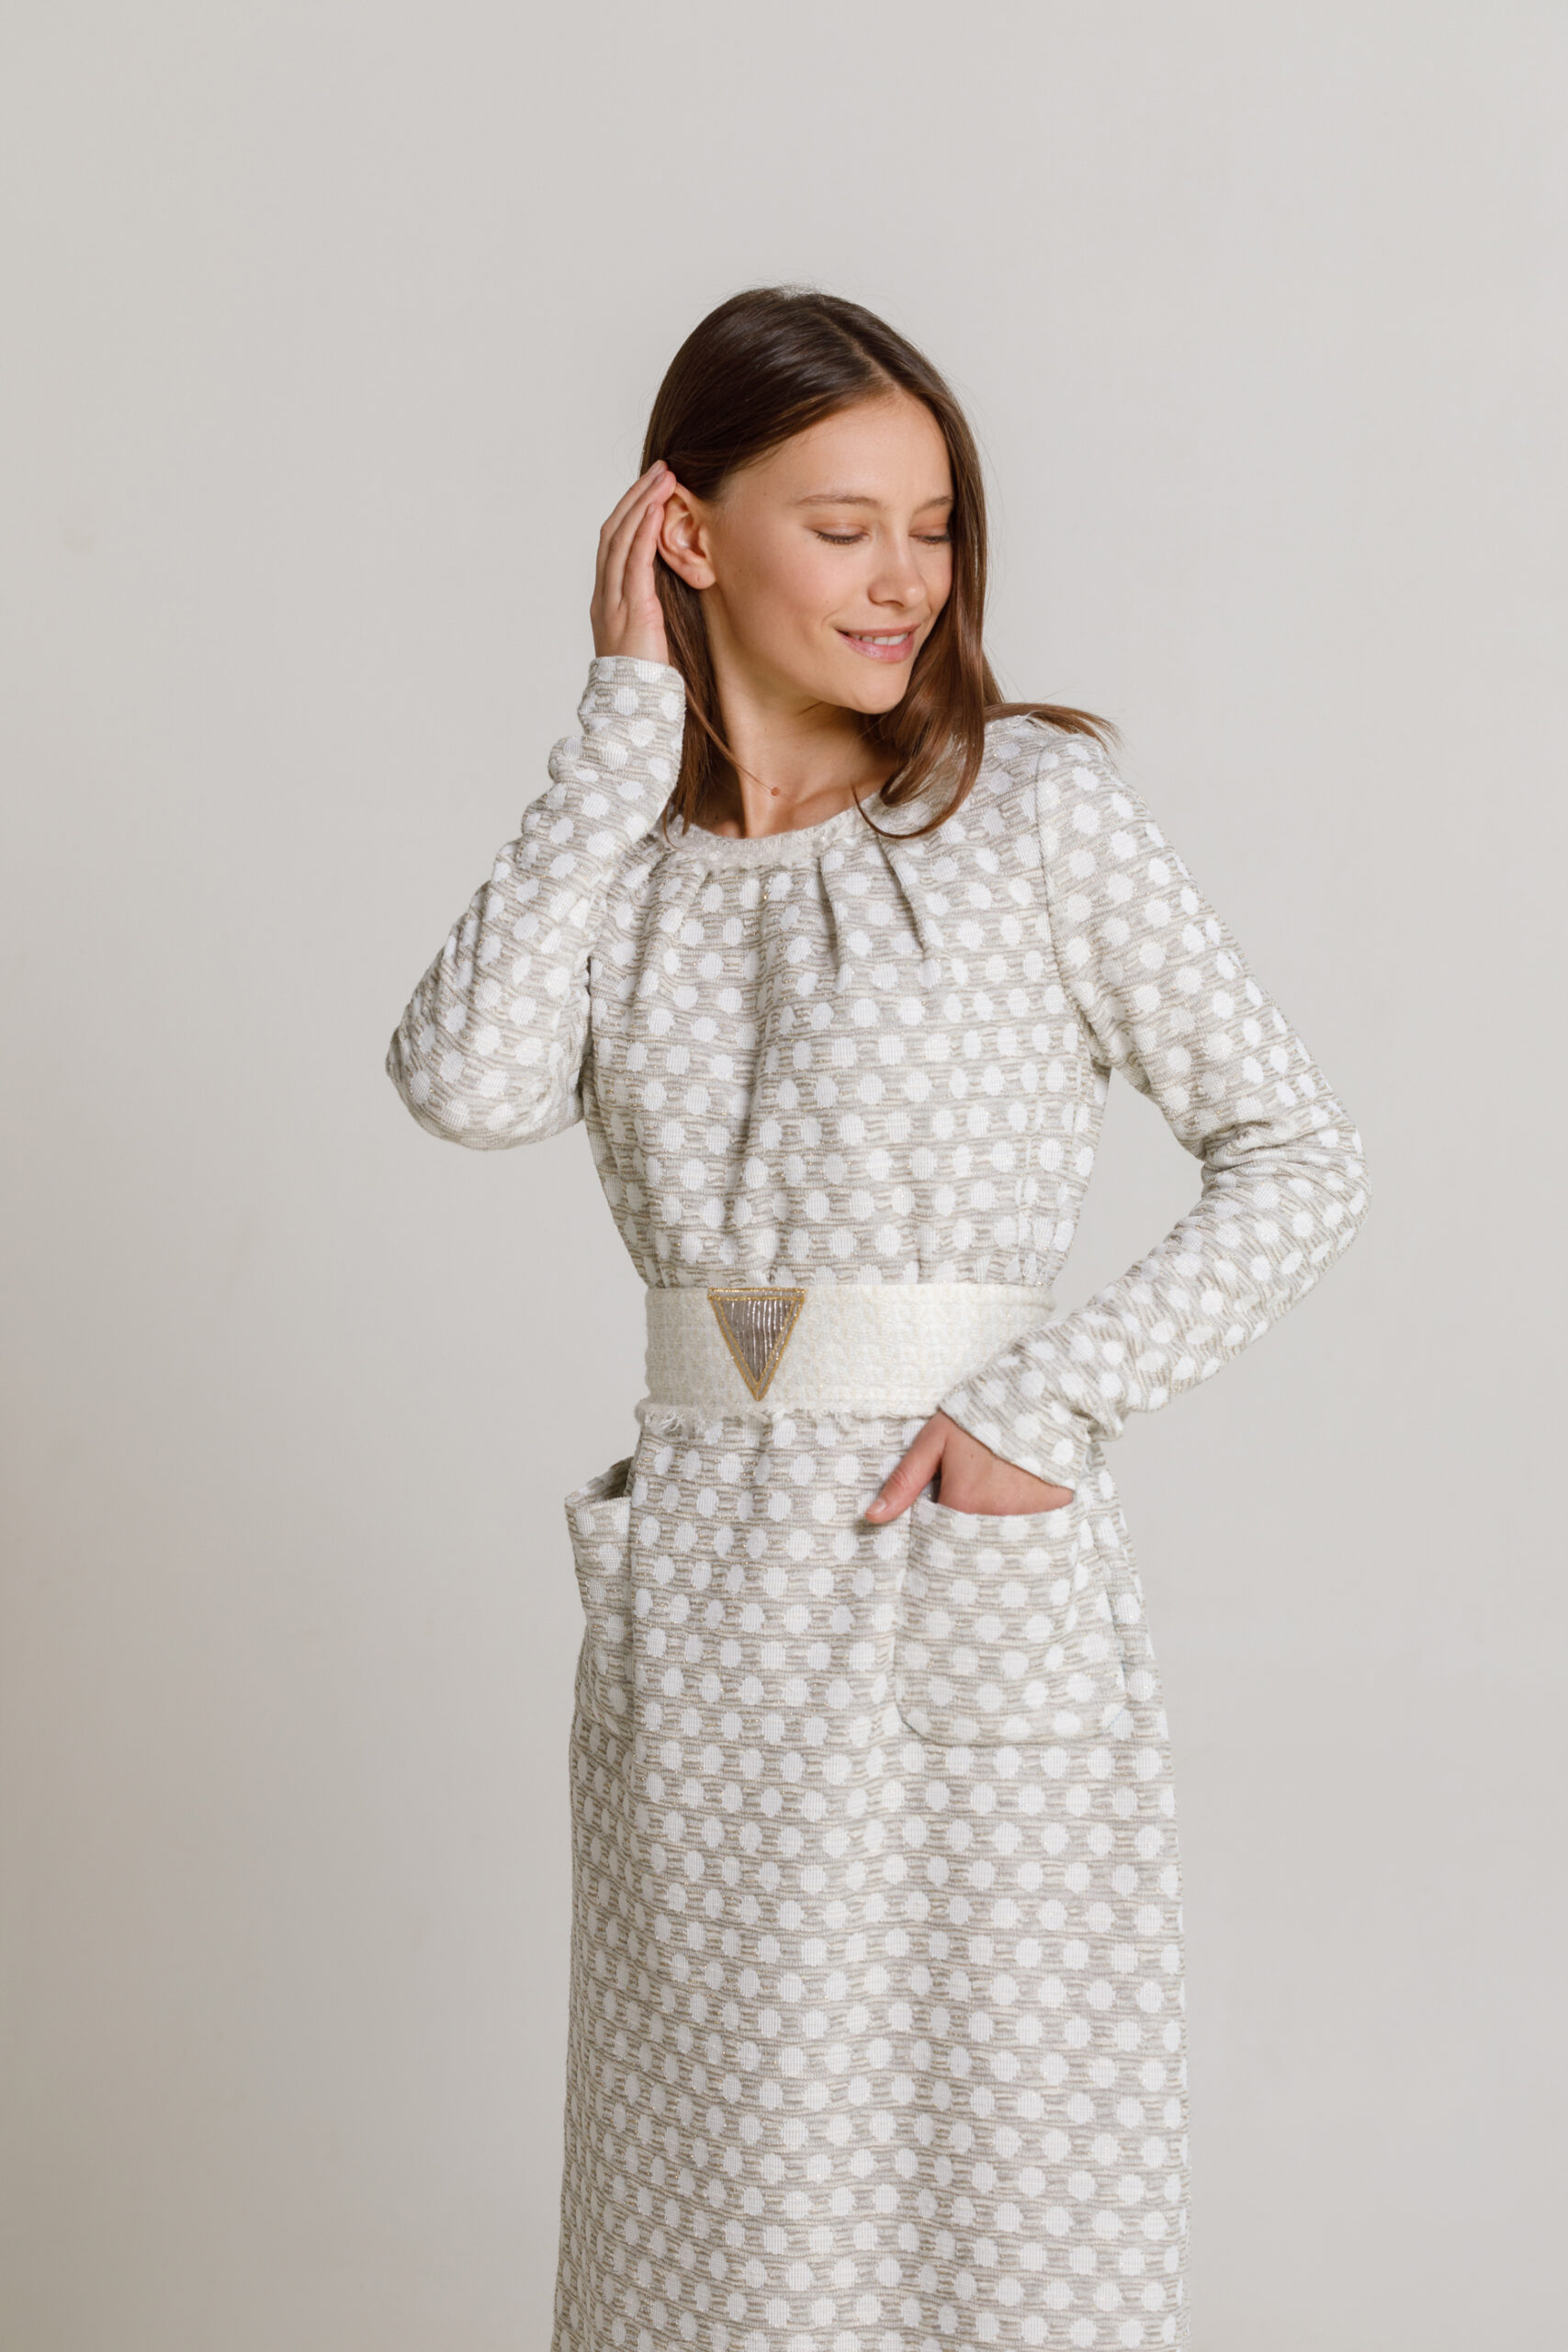 DRESS ASTRID with polka dots. Natural fabrics, original design, handmade embroidery